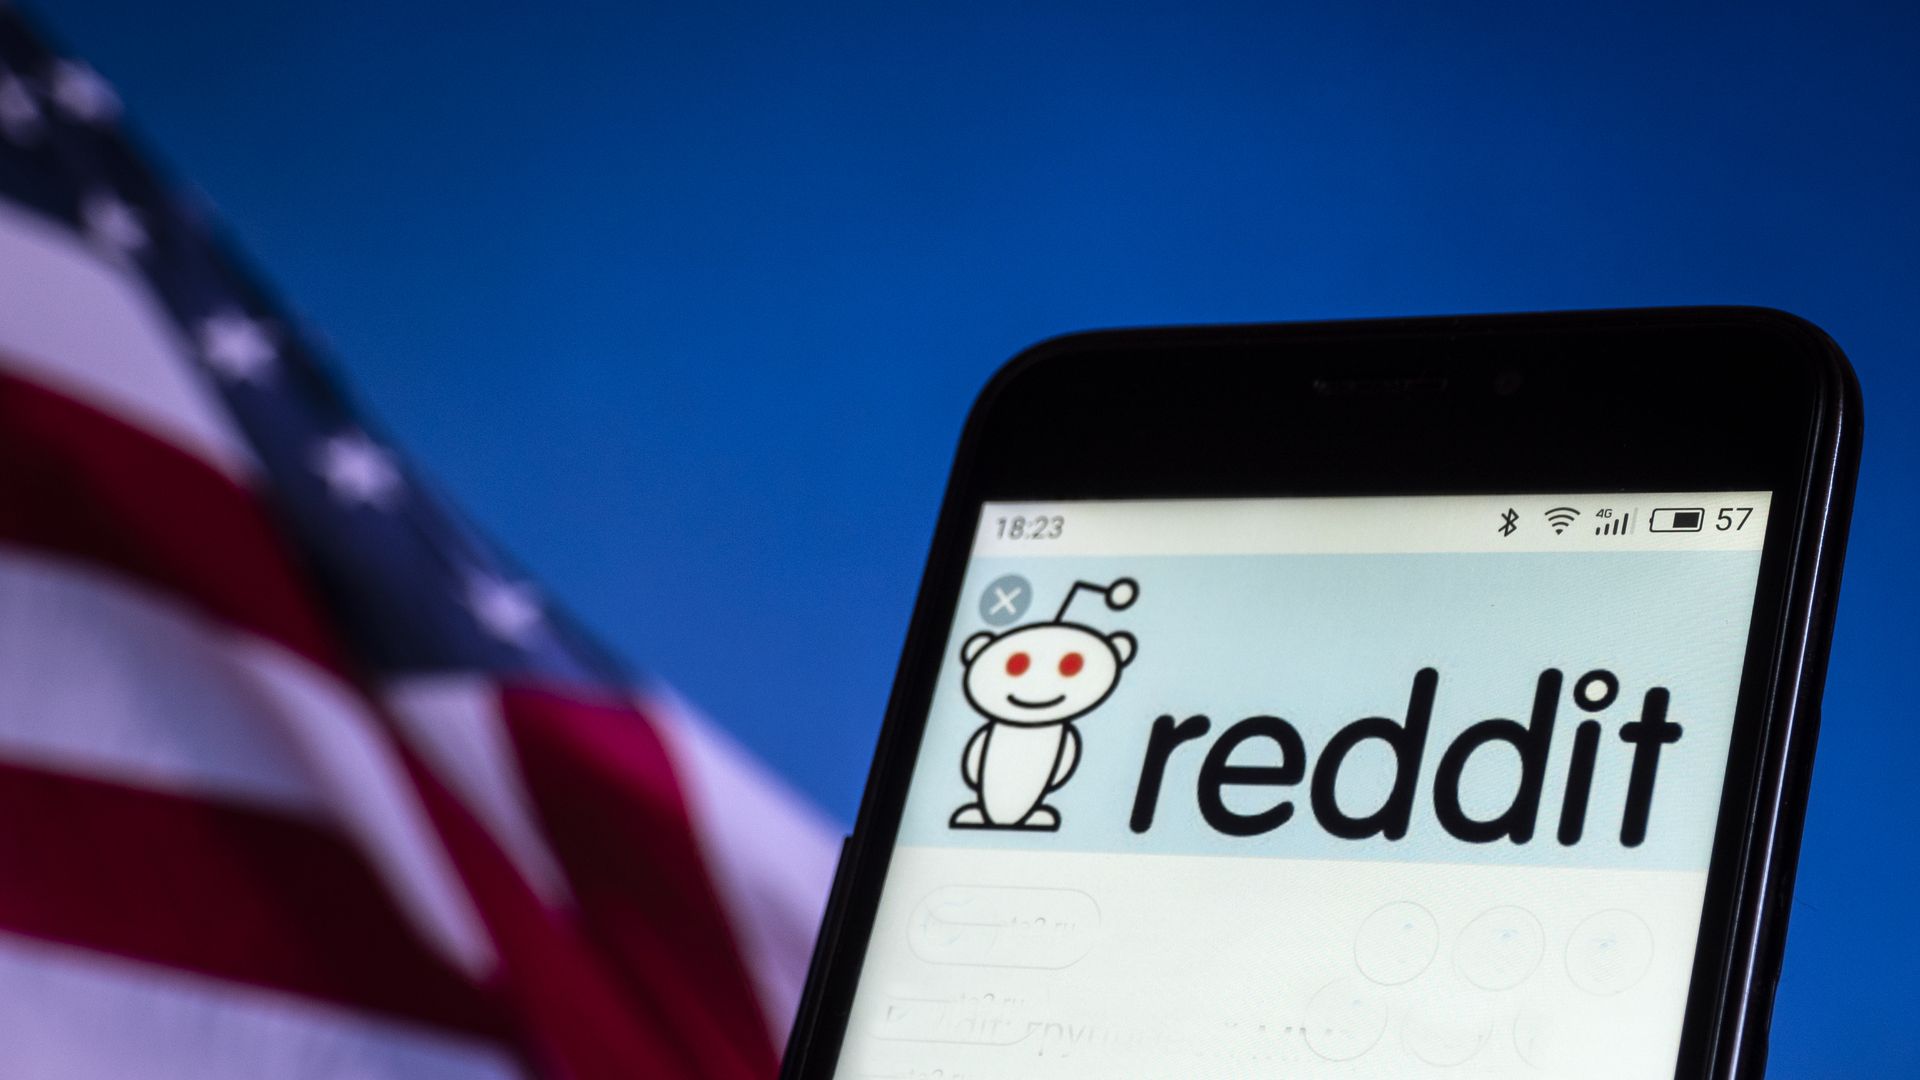 Reddit logo on a smartphone screen